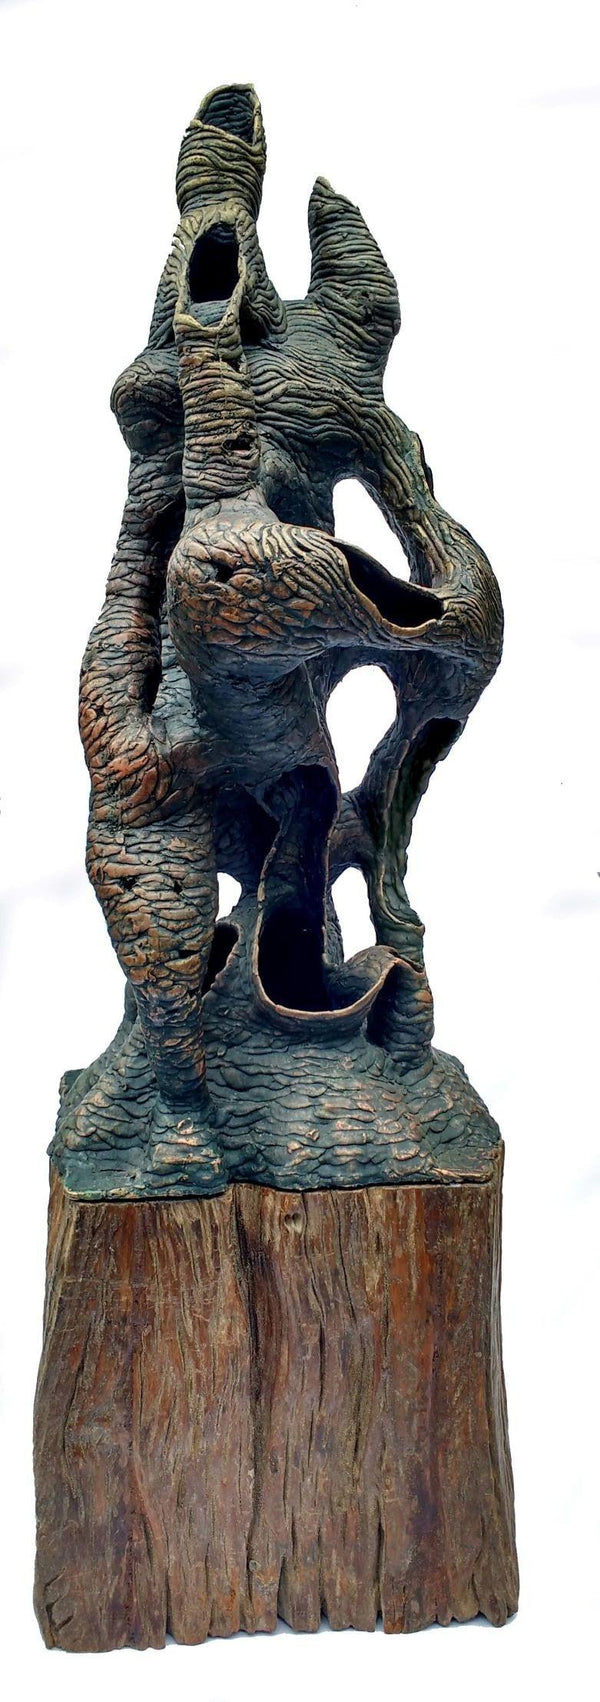 The Pinch Of Life Sculpture by Vivek Das | ArtZolo.com